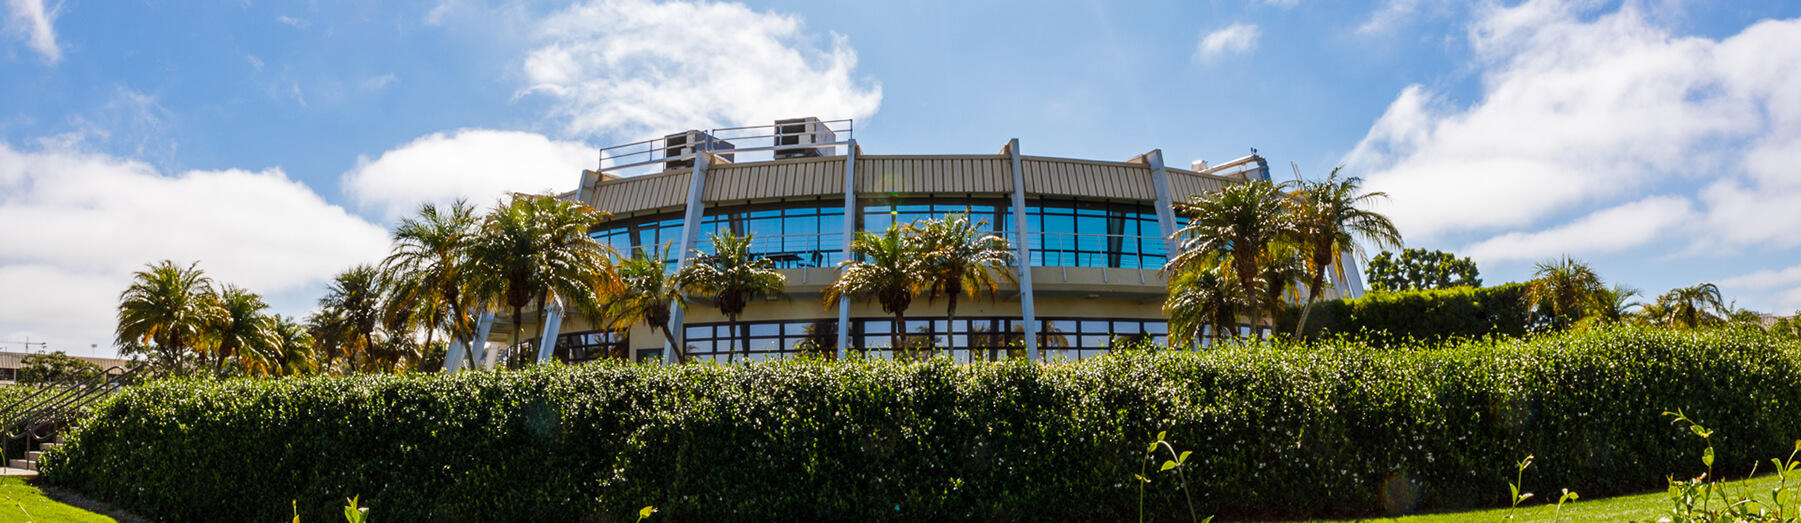 San Diego office building